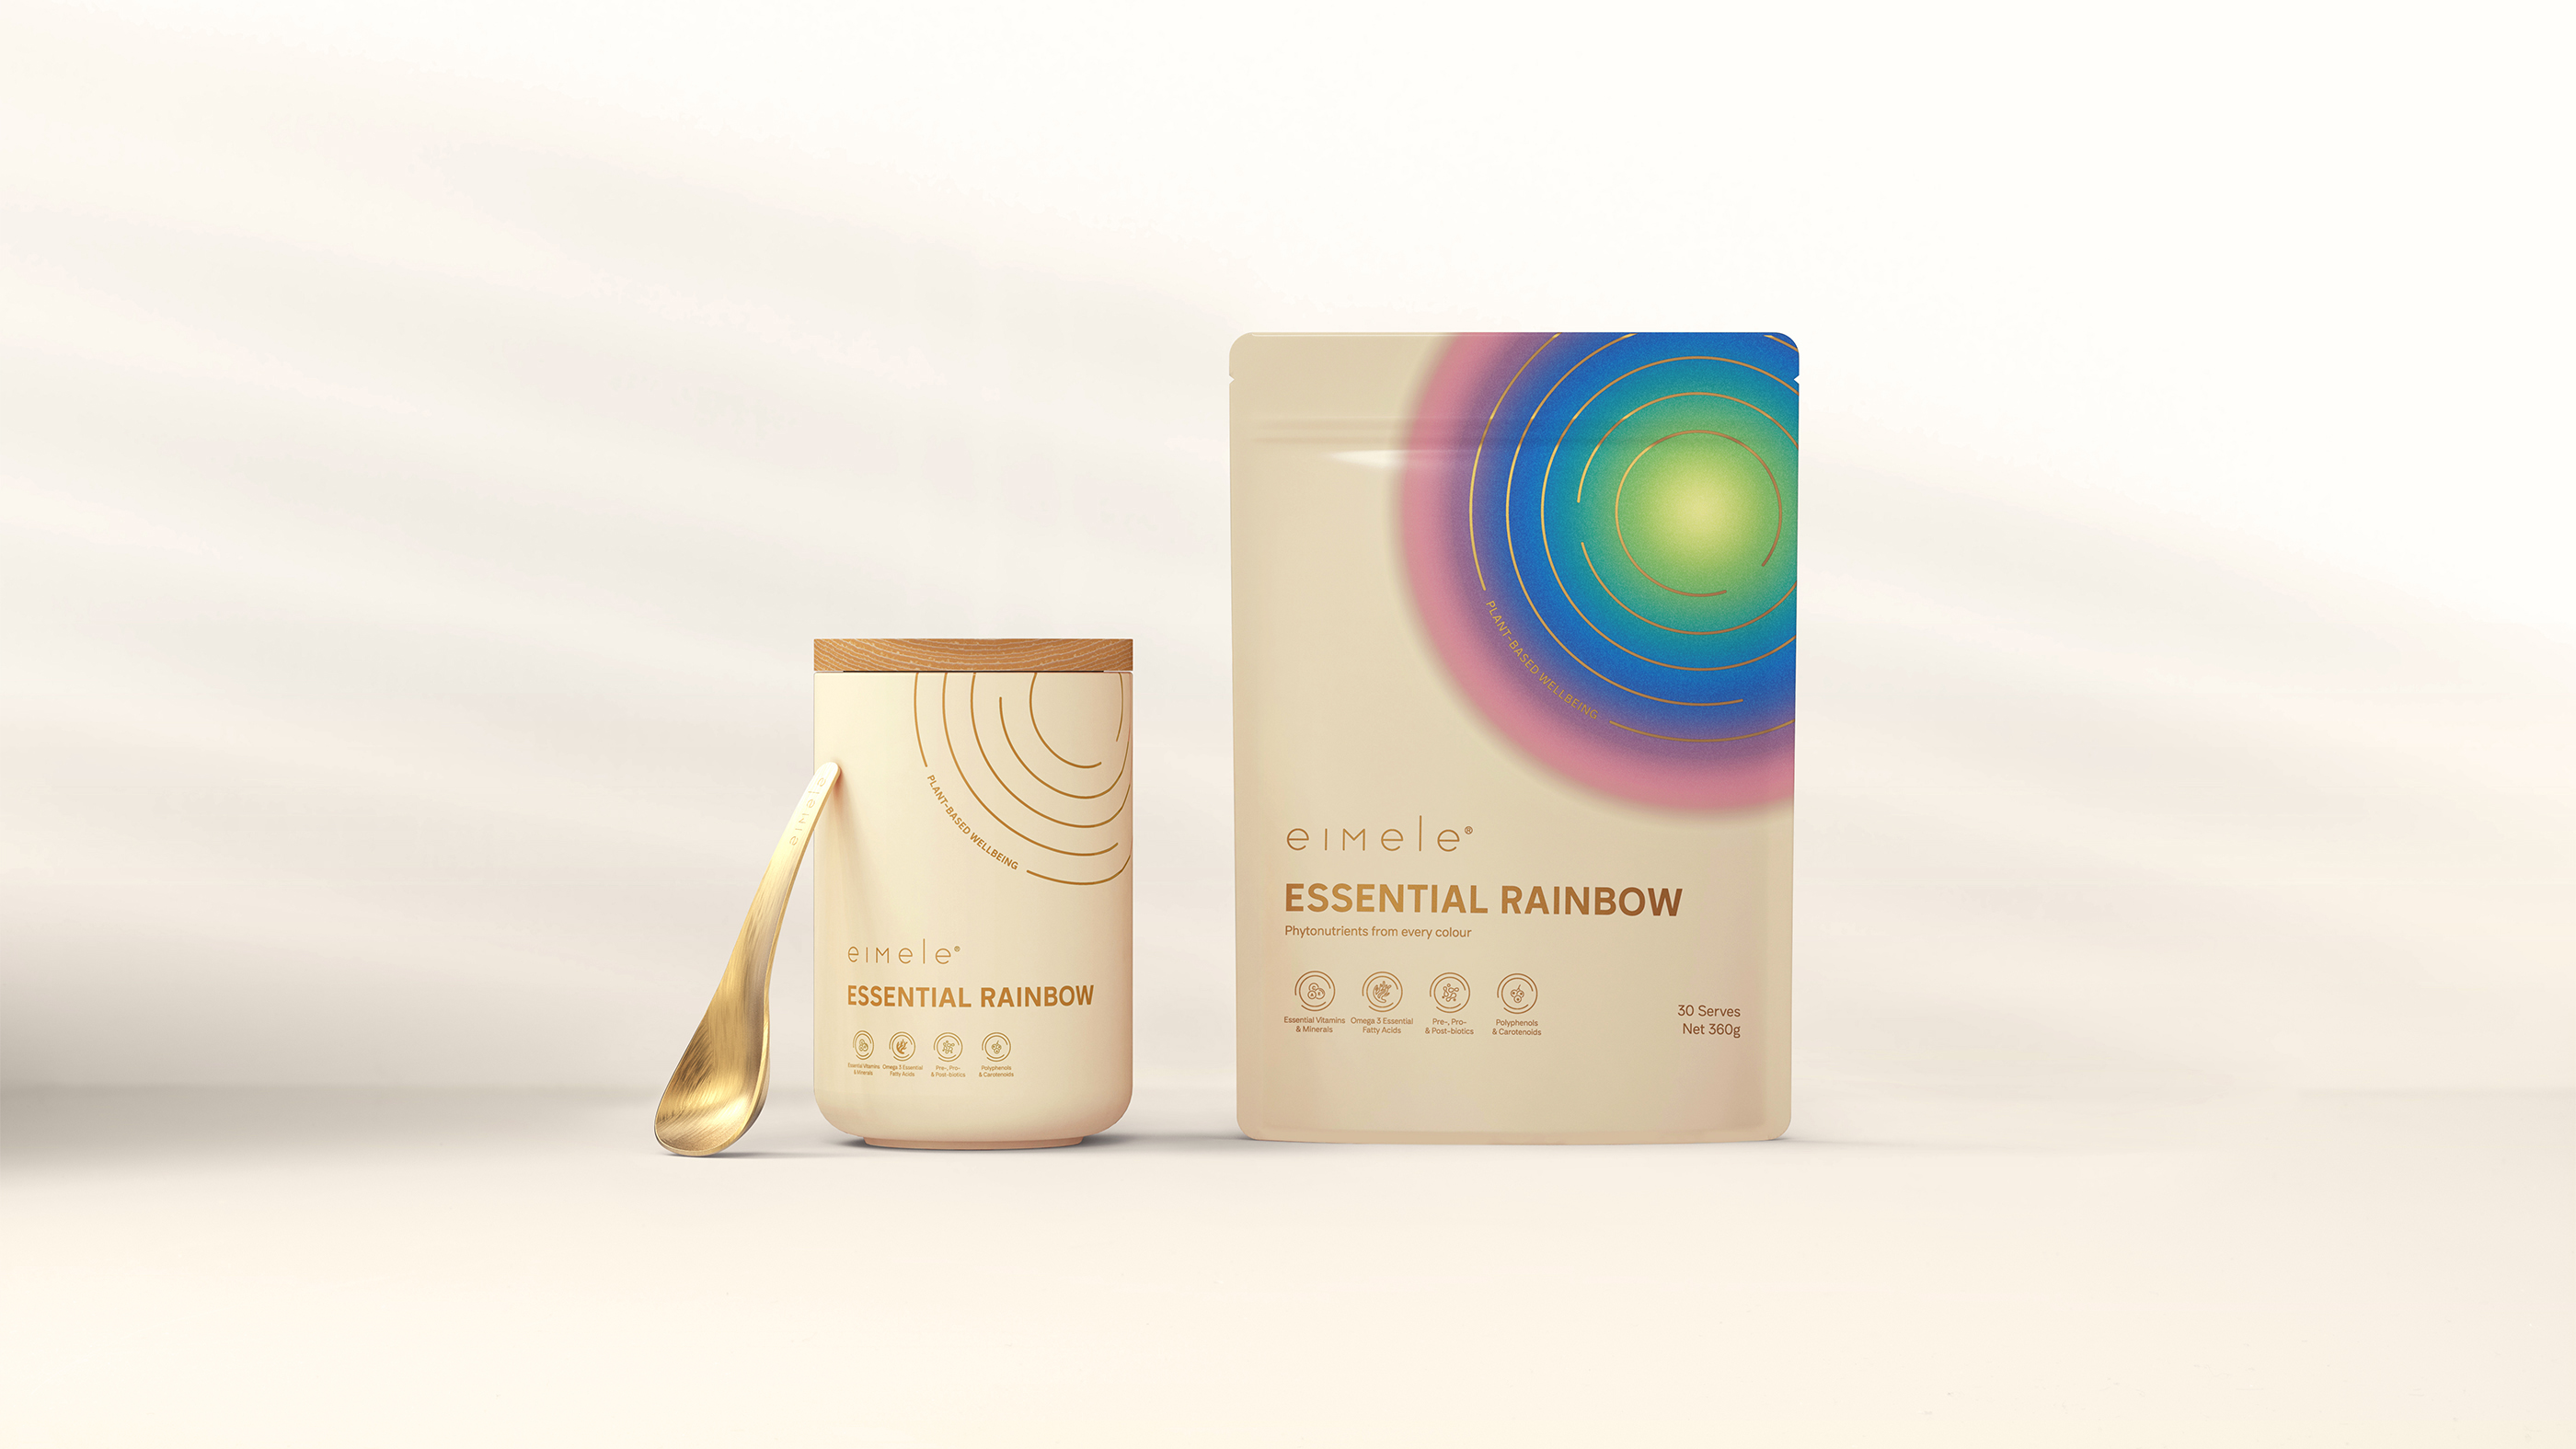 eimele - essential rainbow